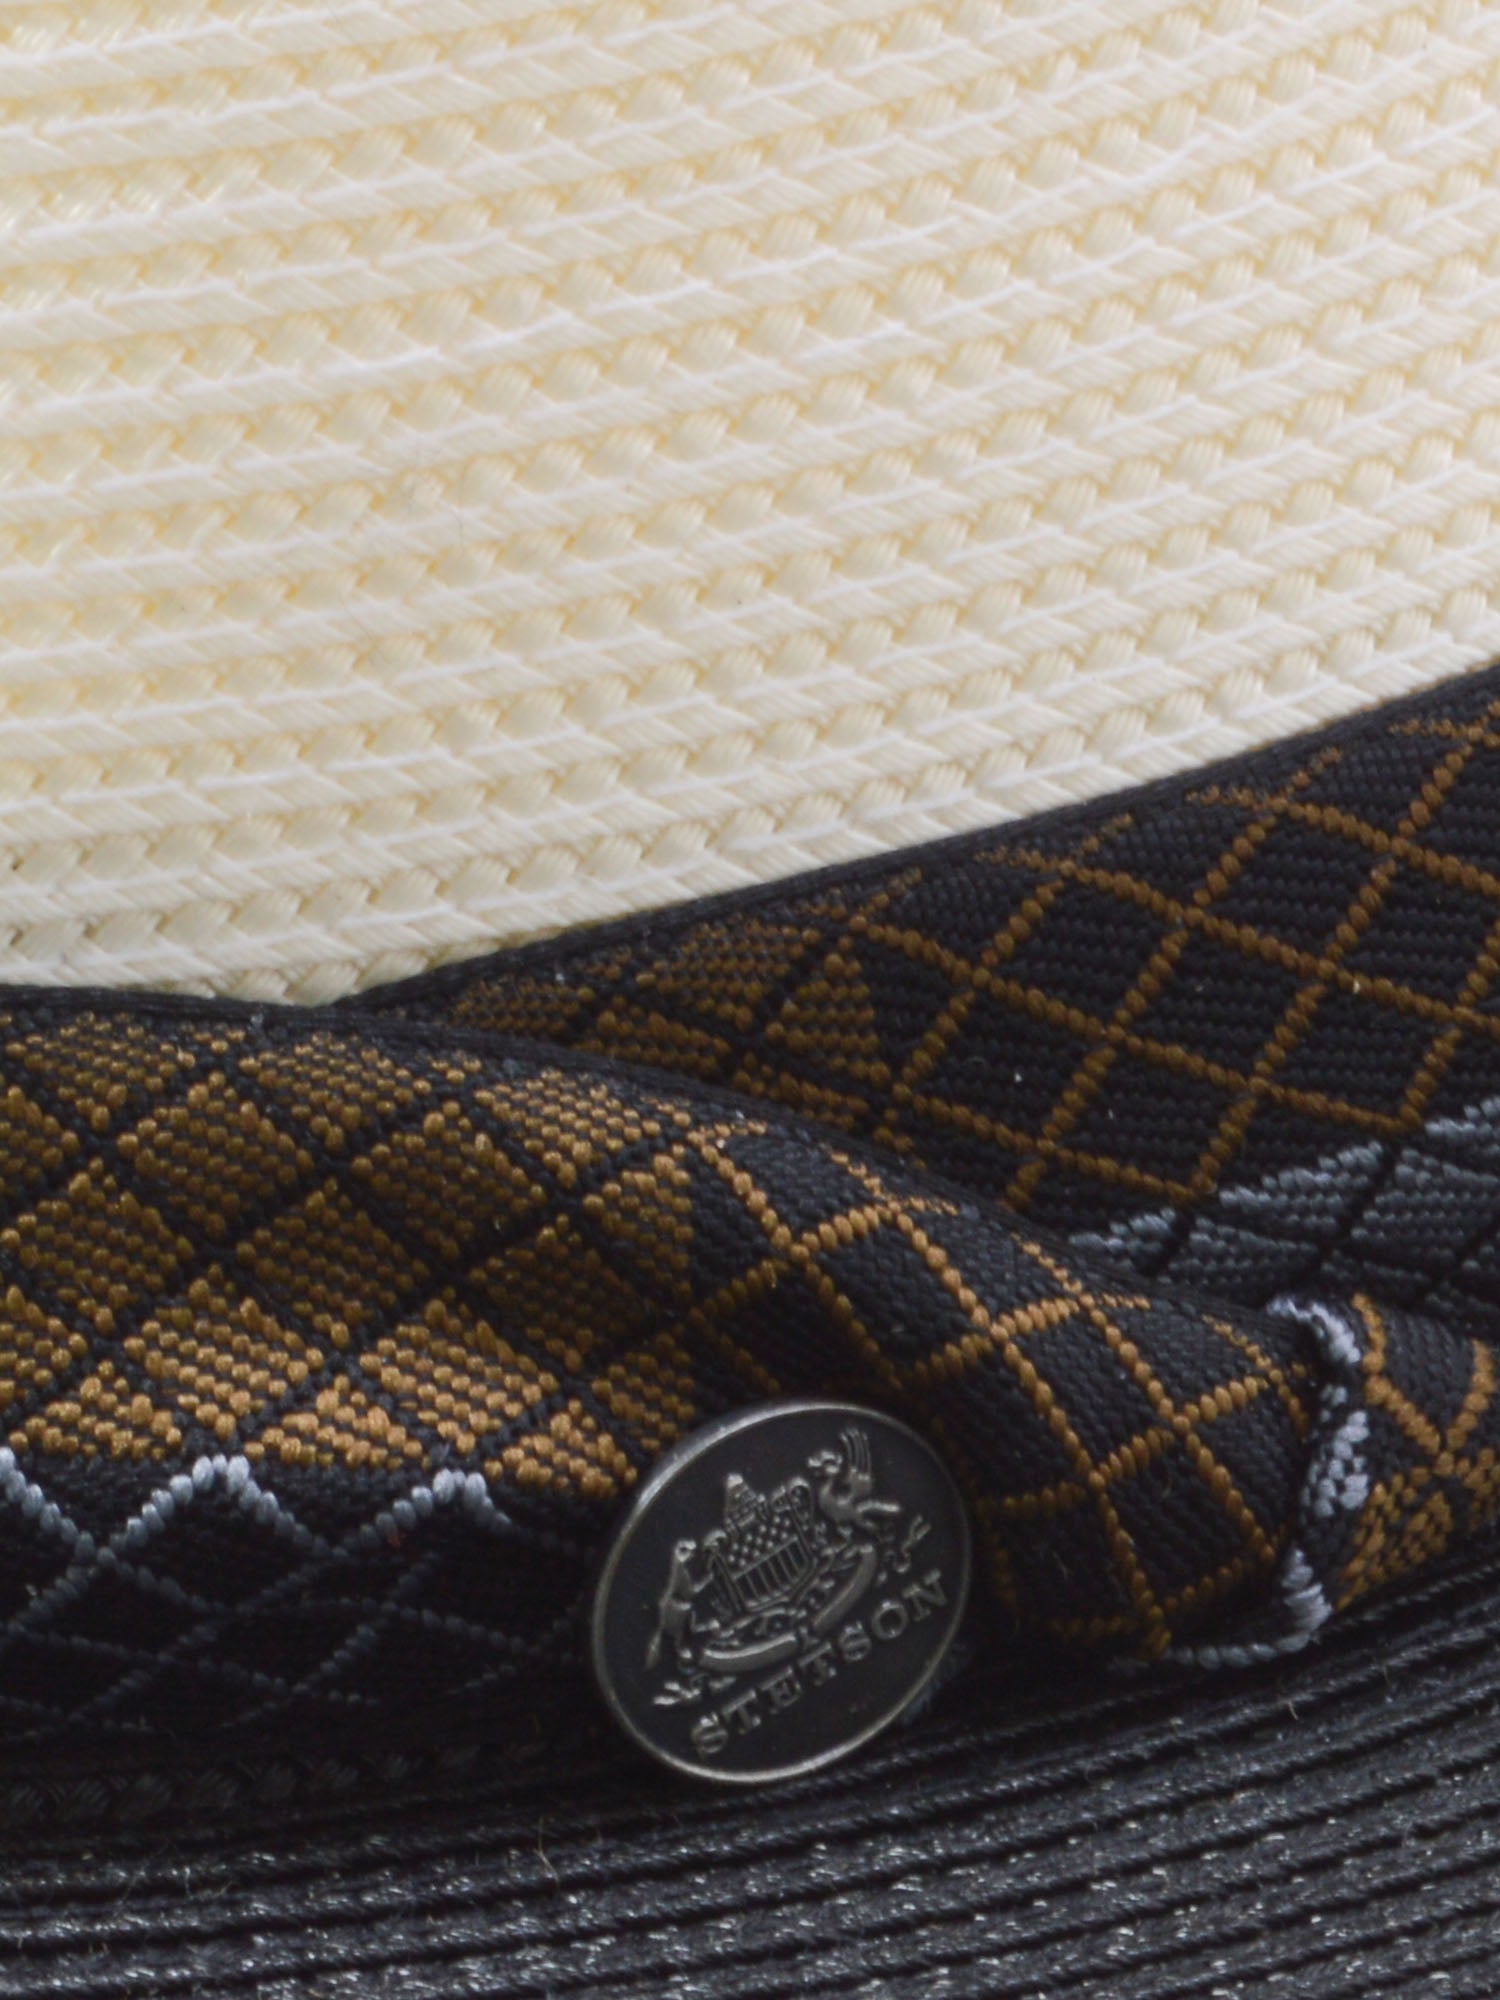 Stetson Andover Florentine Milan Straw Hat in Ivory/Black